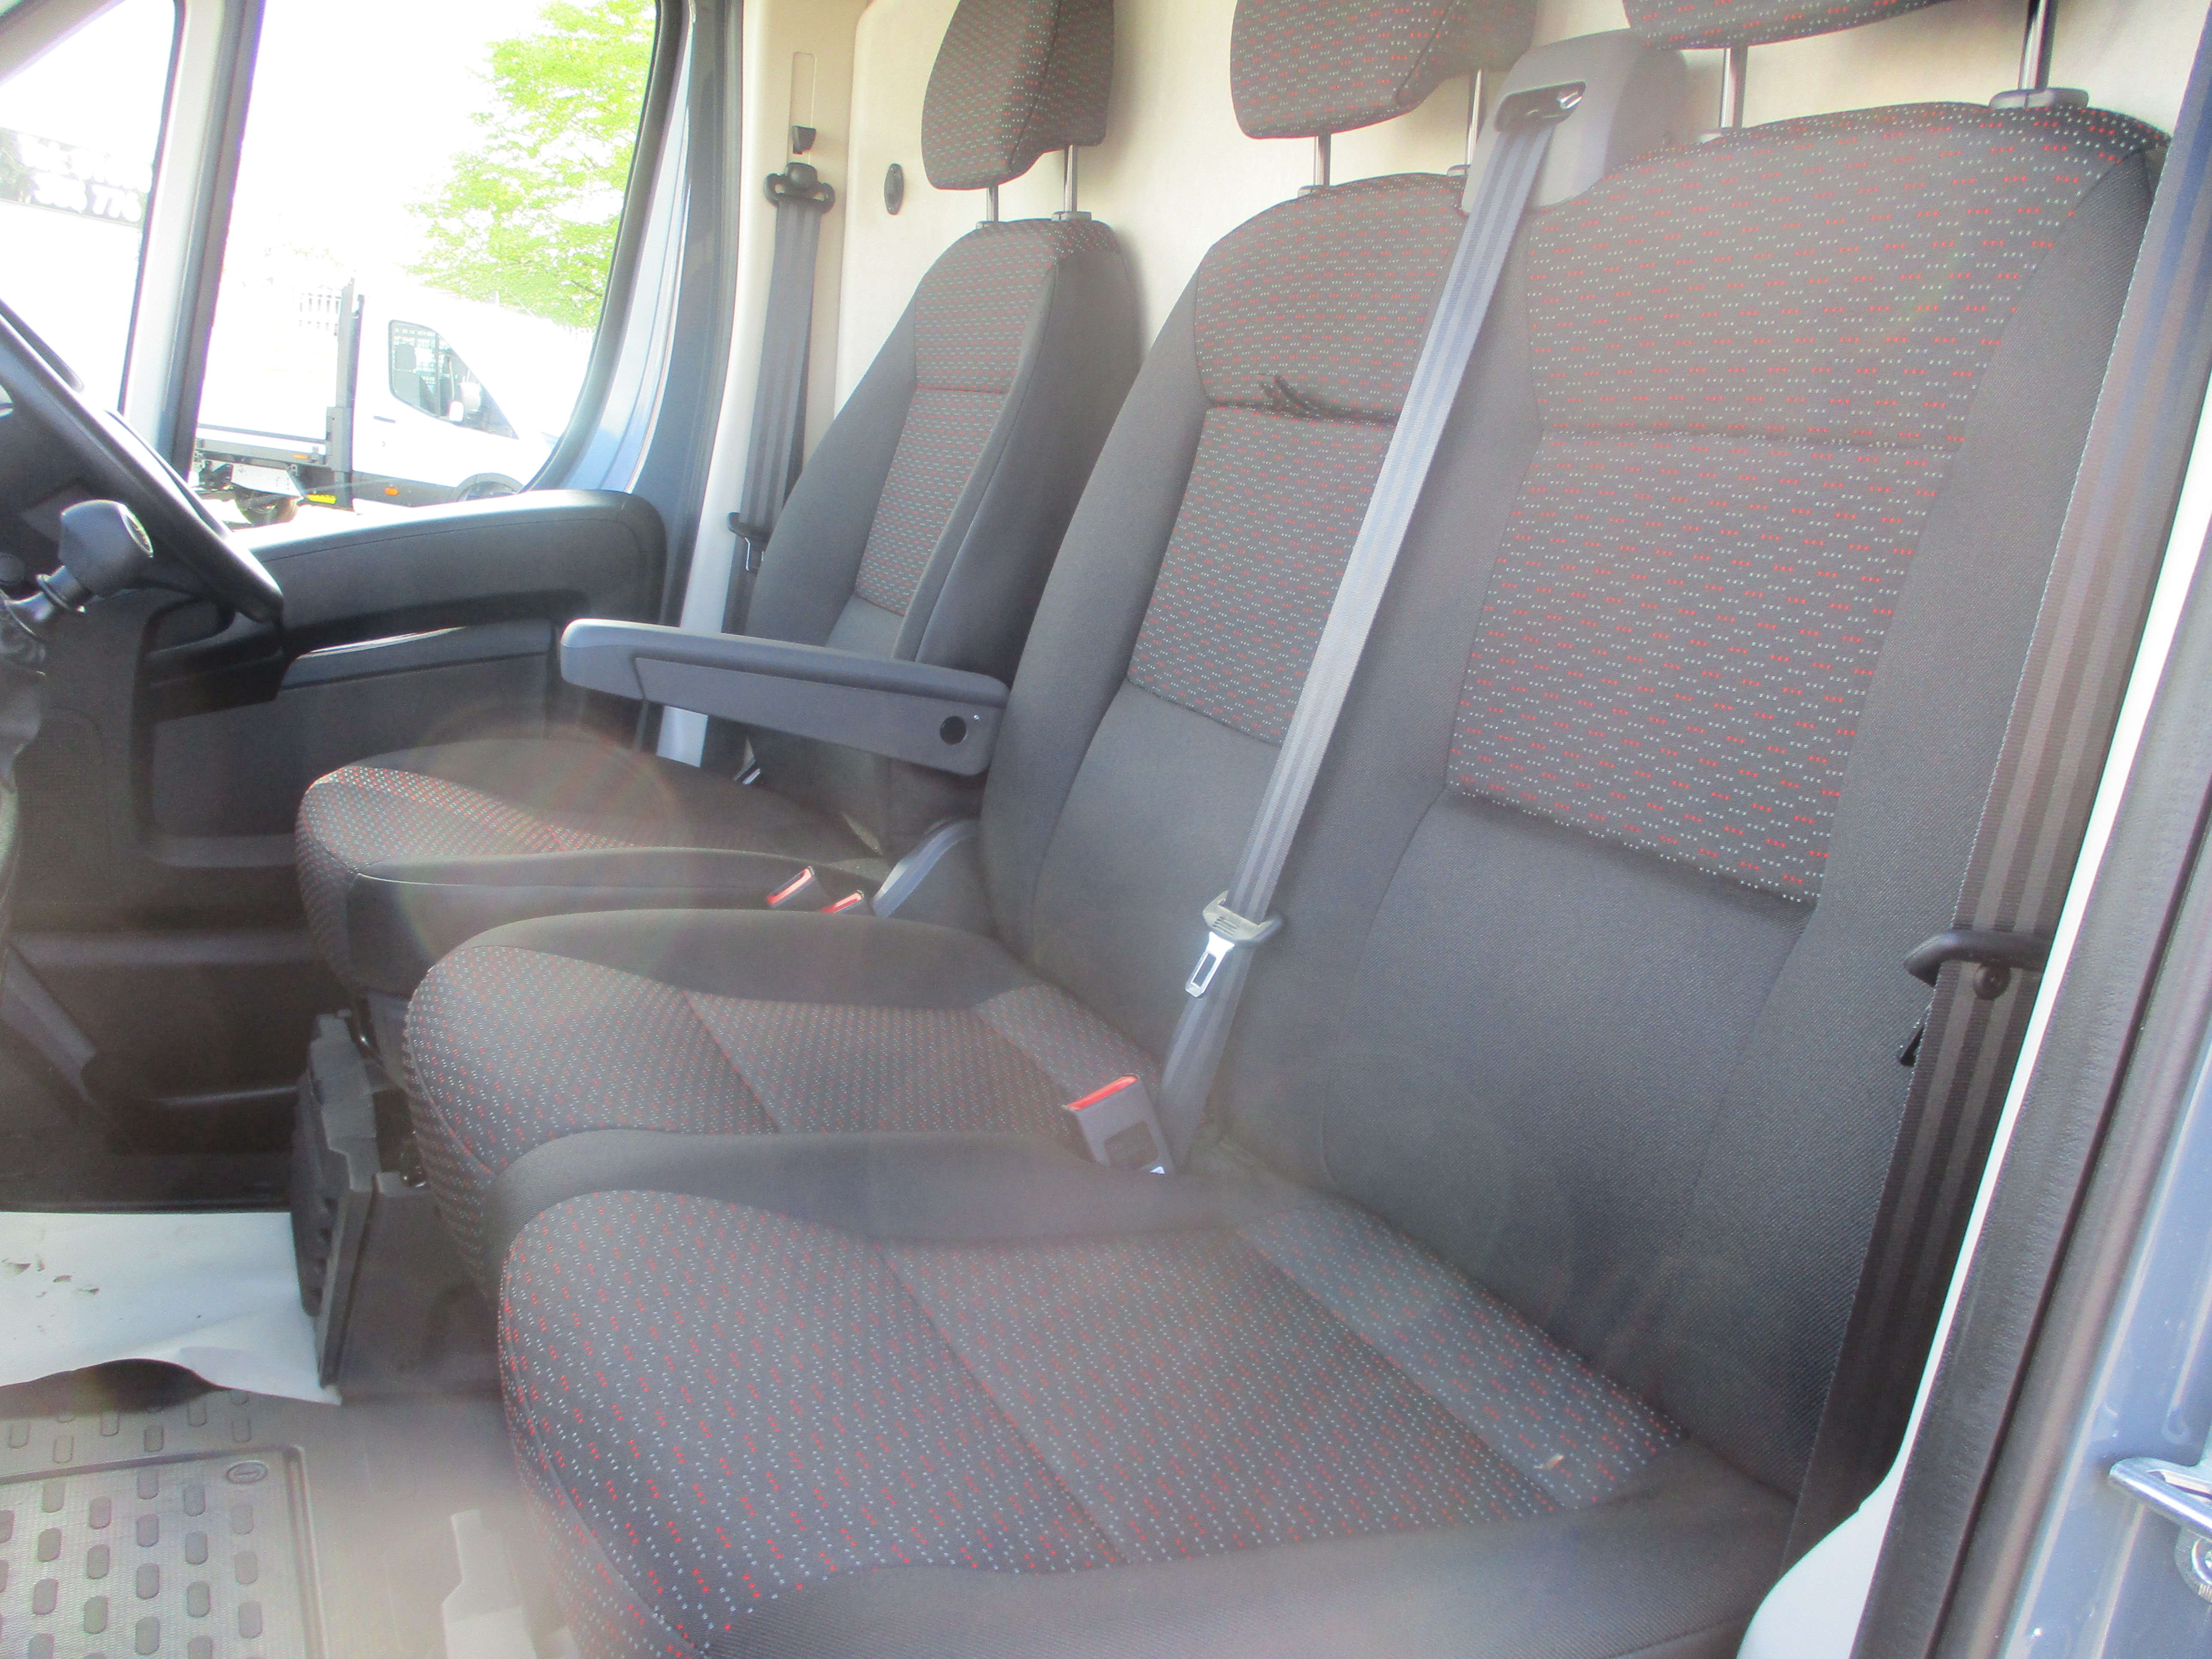 Vauxhall Movano 3500 L2H2 140PS Dynamic Panel Van EURO 6 MASSIVE SPEC includes, AIR CON, SAT NAV, CRUISE CONTROL, PARKING SENSORS & MORE....